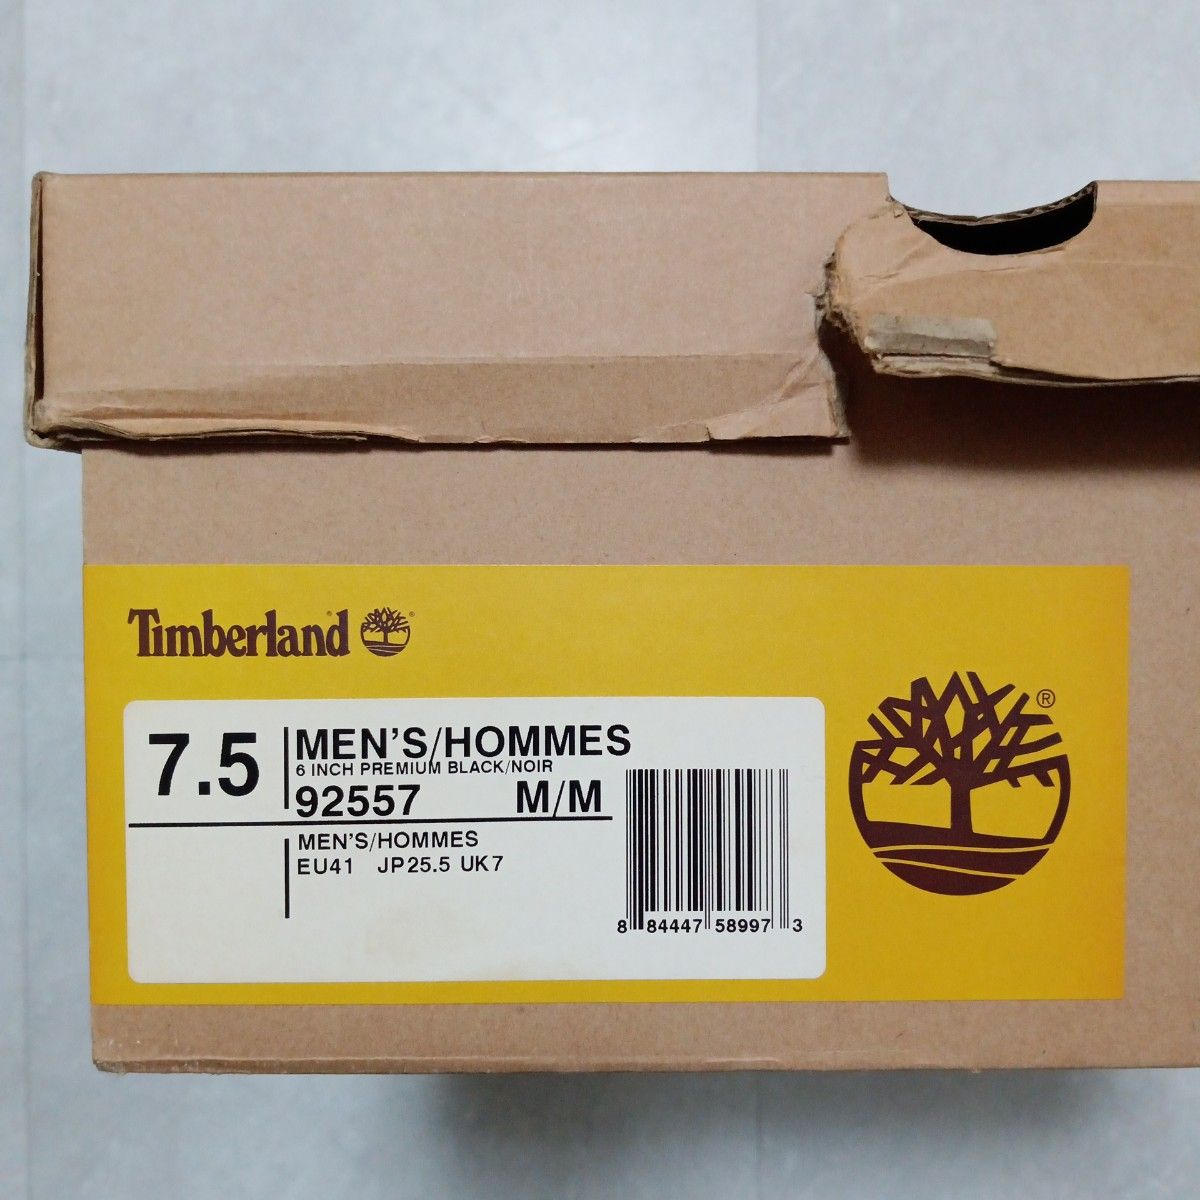 Timberland 6 INCH PREMIUM BLACK/NOIR